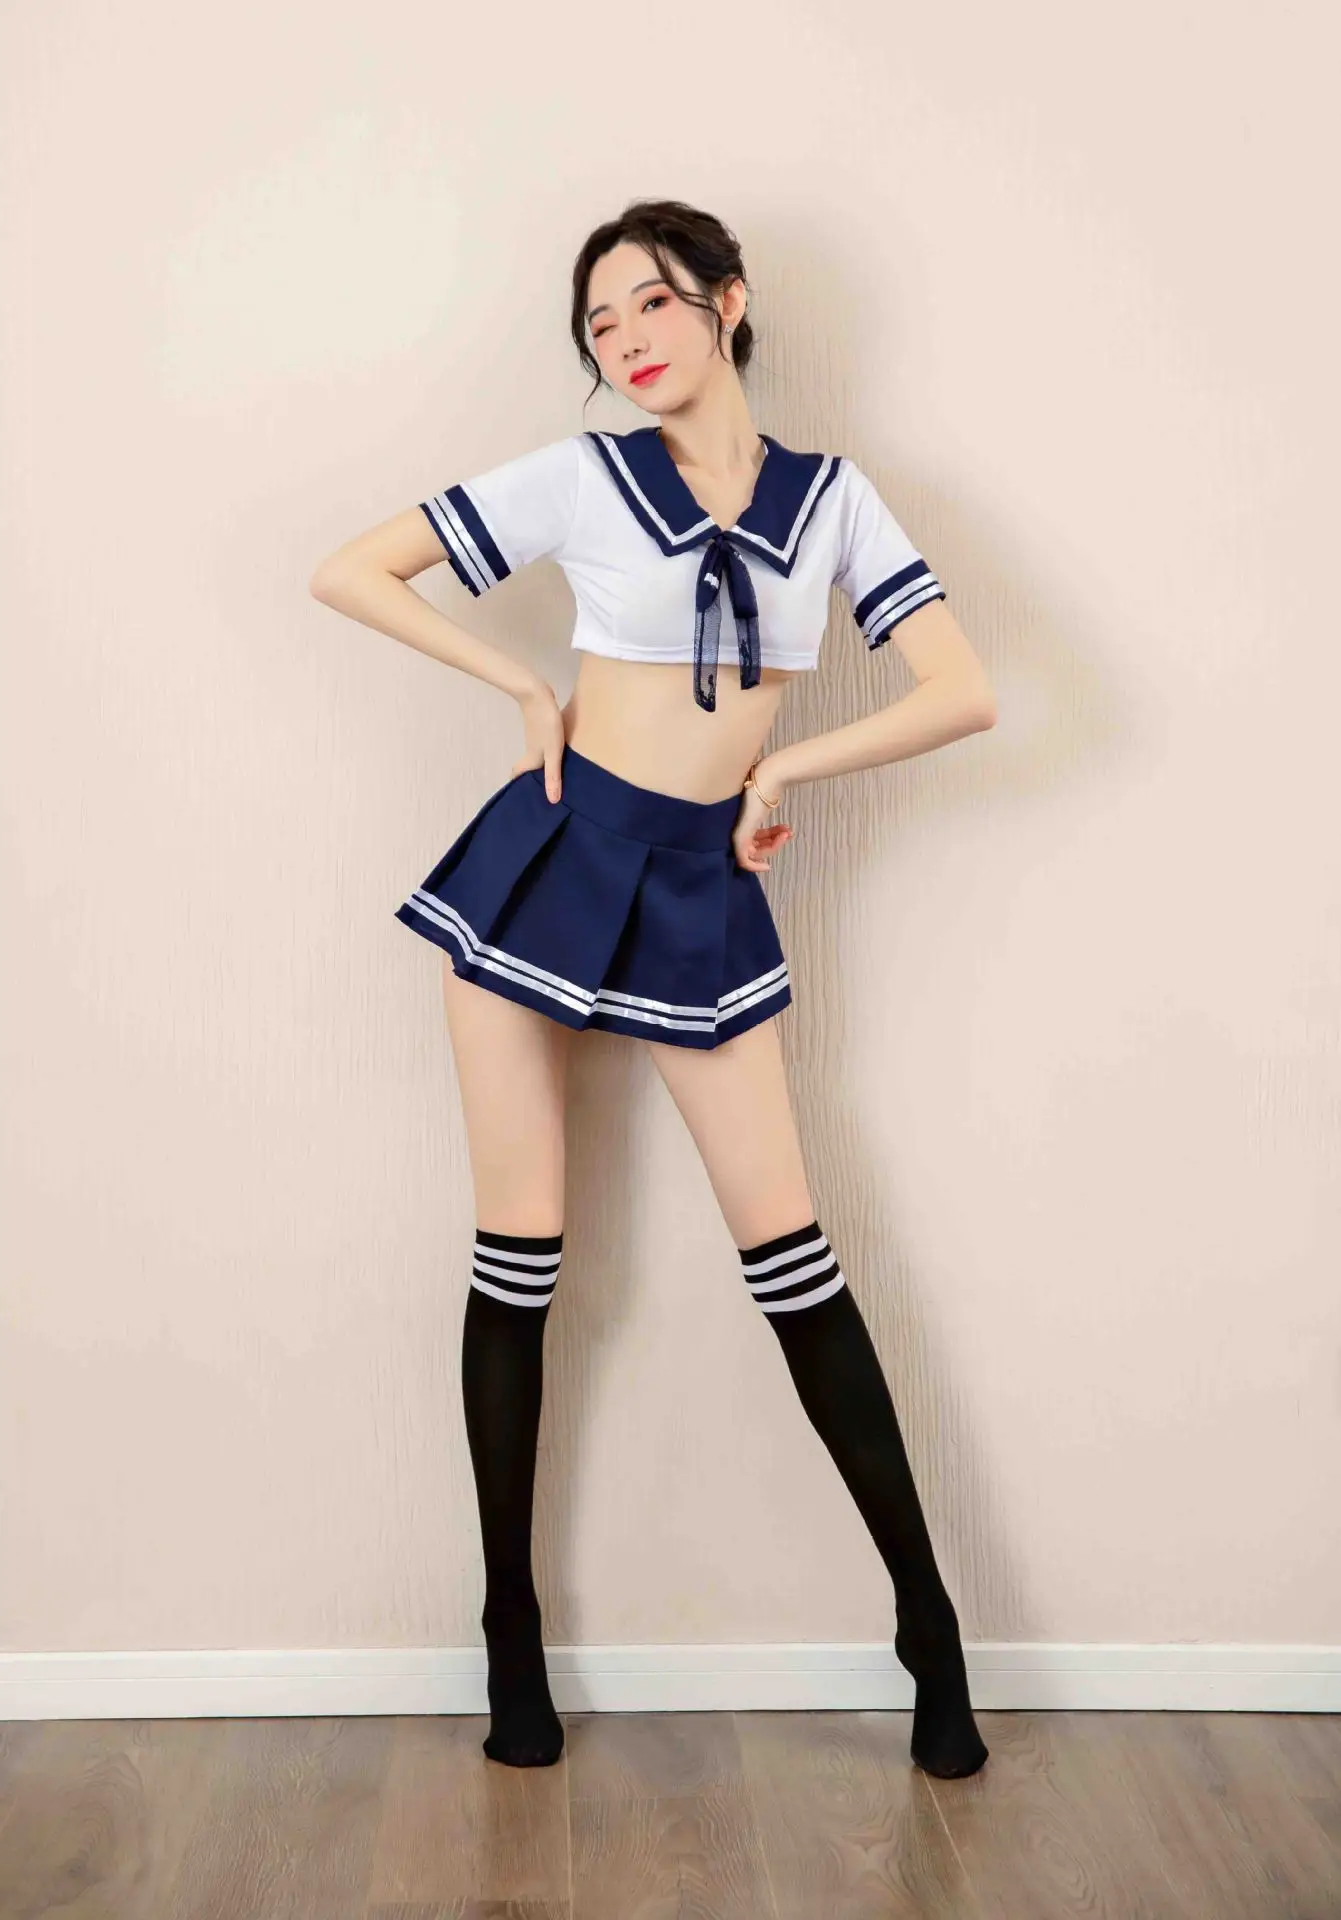 Japanese School Girl Nudes